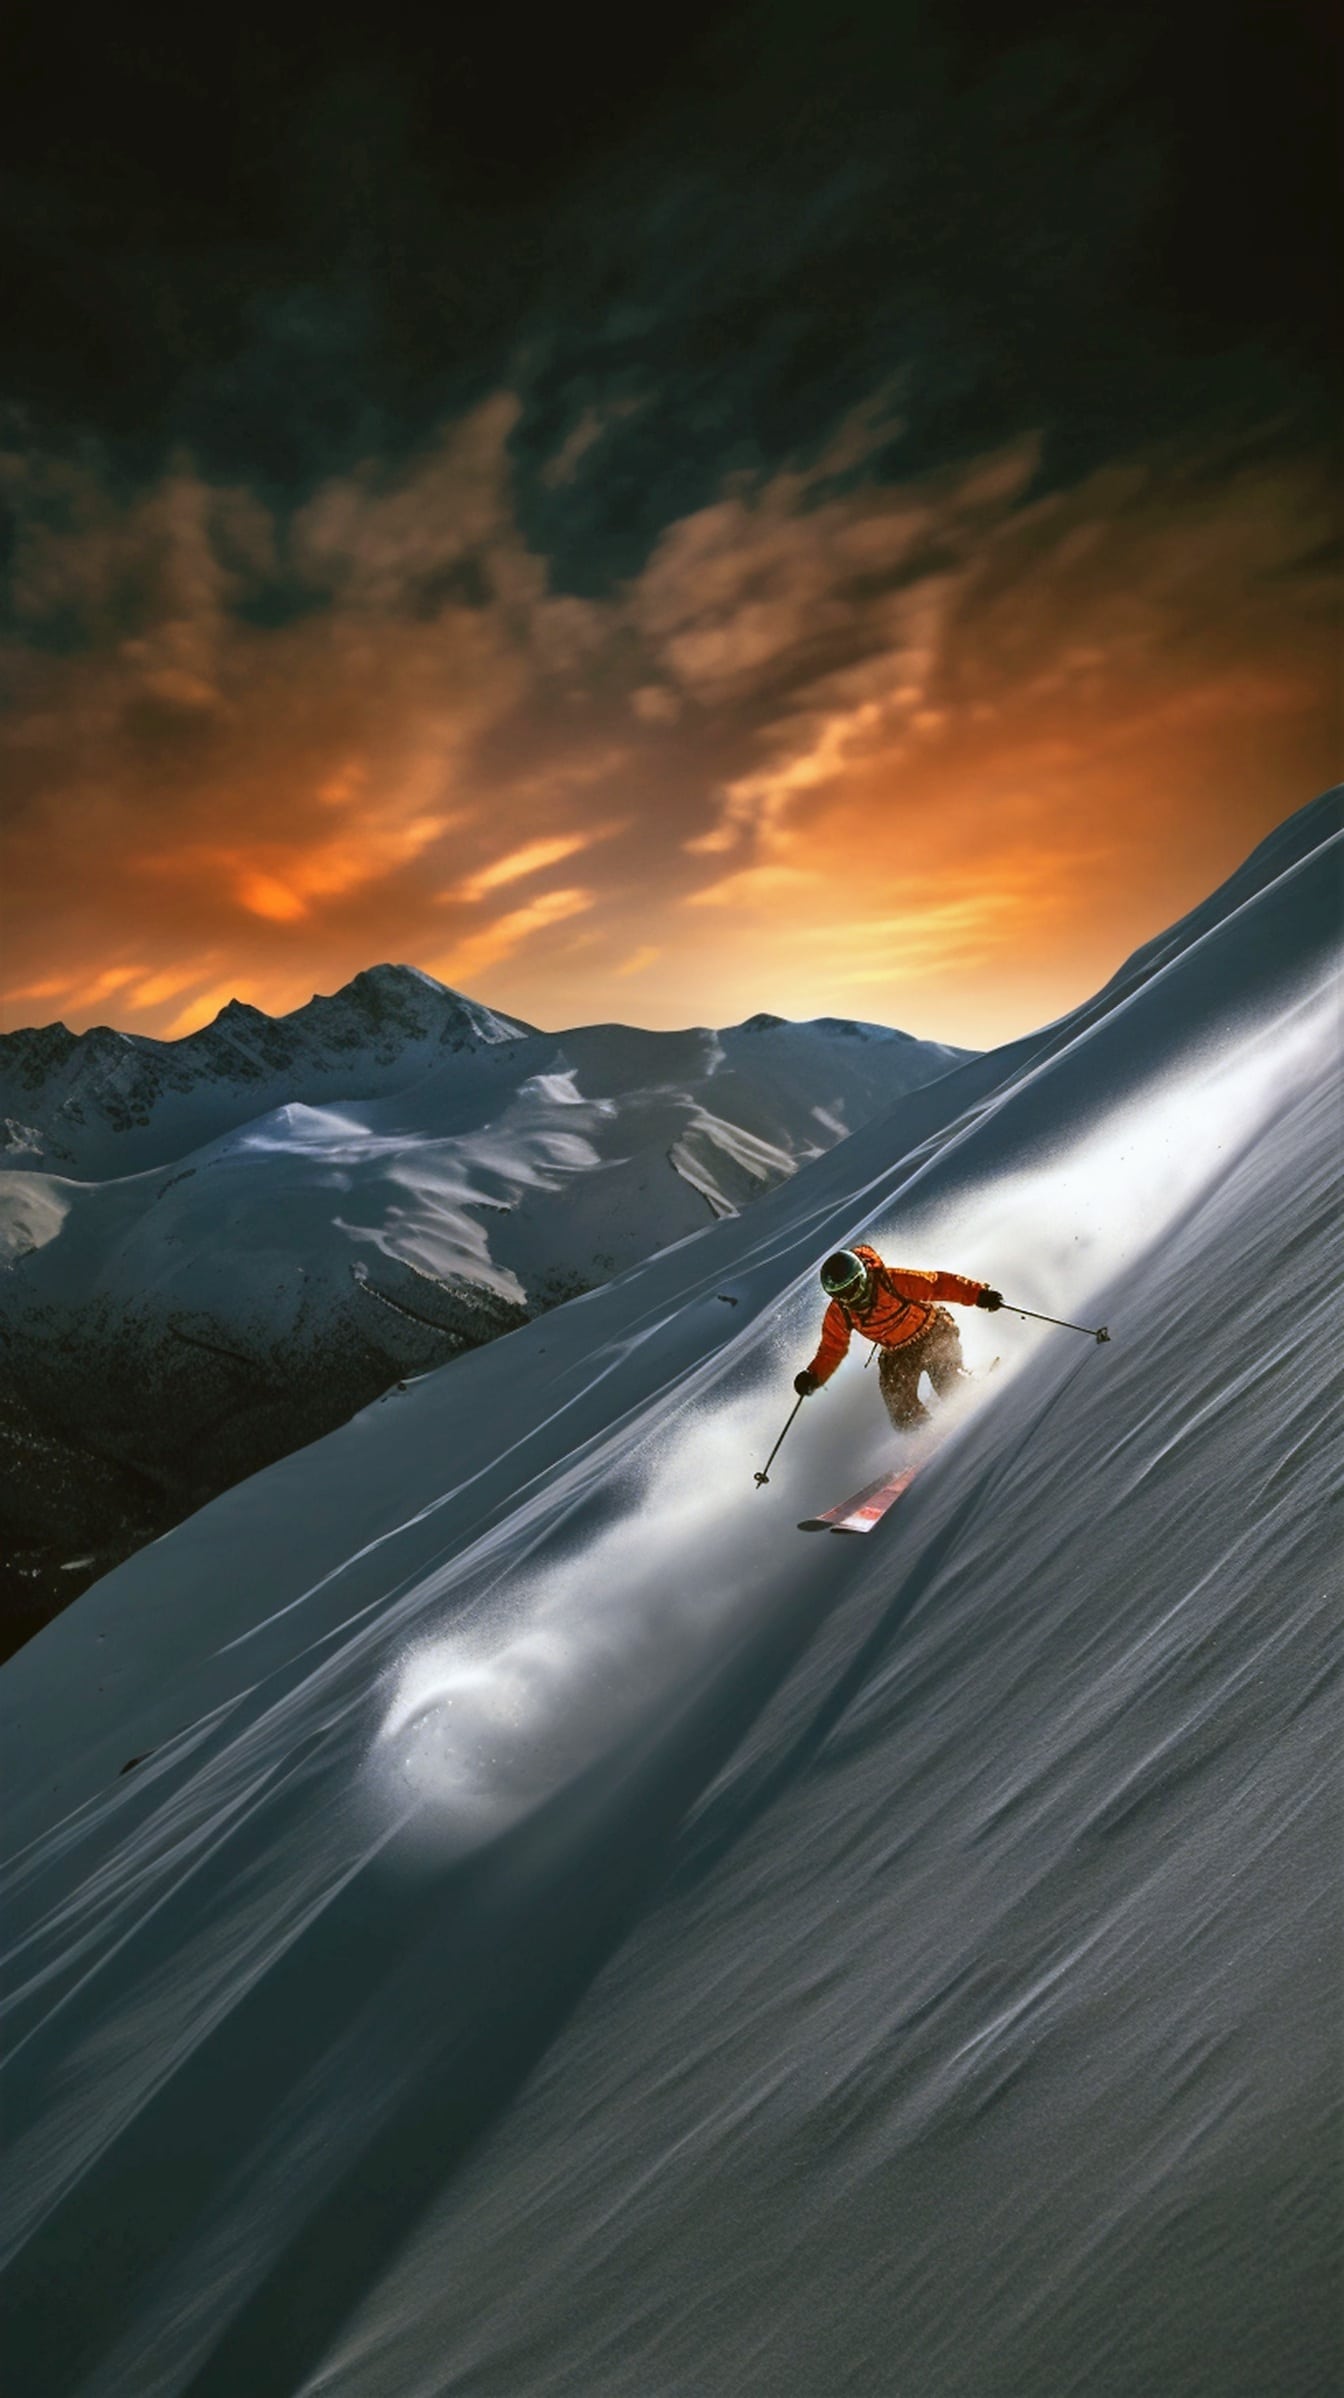 extreme skiing